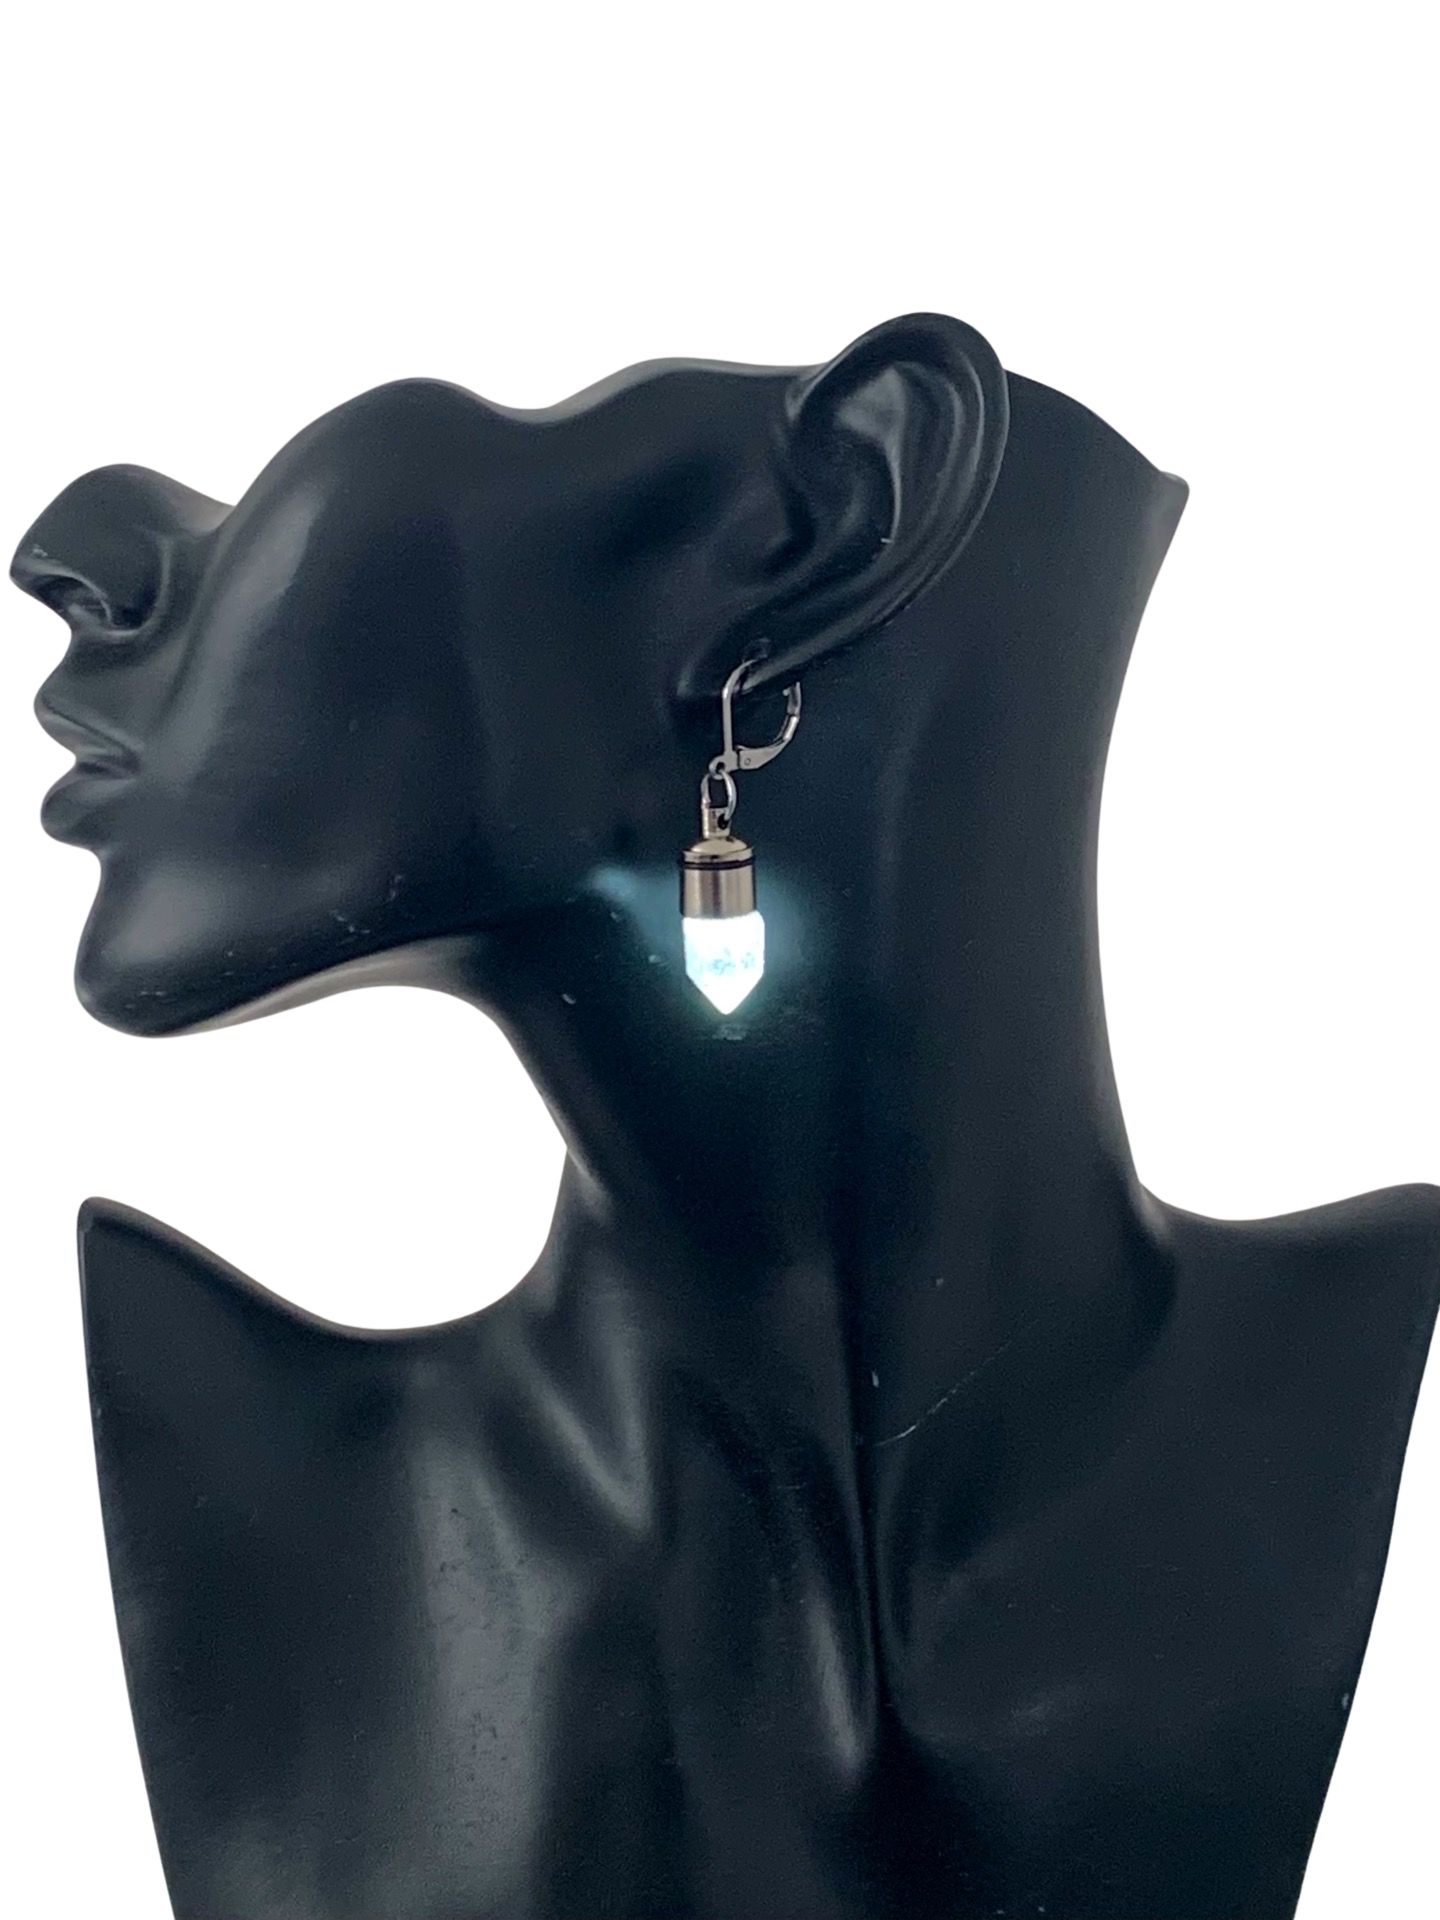 Cool White LED Crystal Earrings, Glowing, Resin